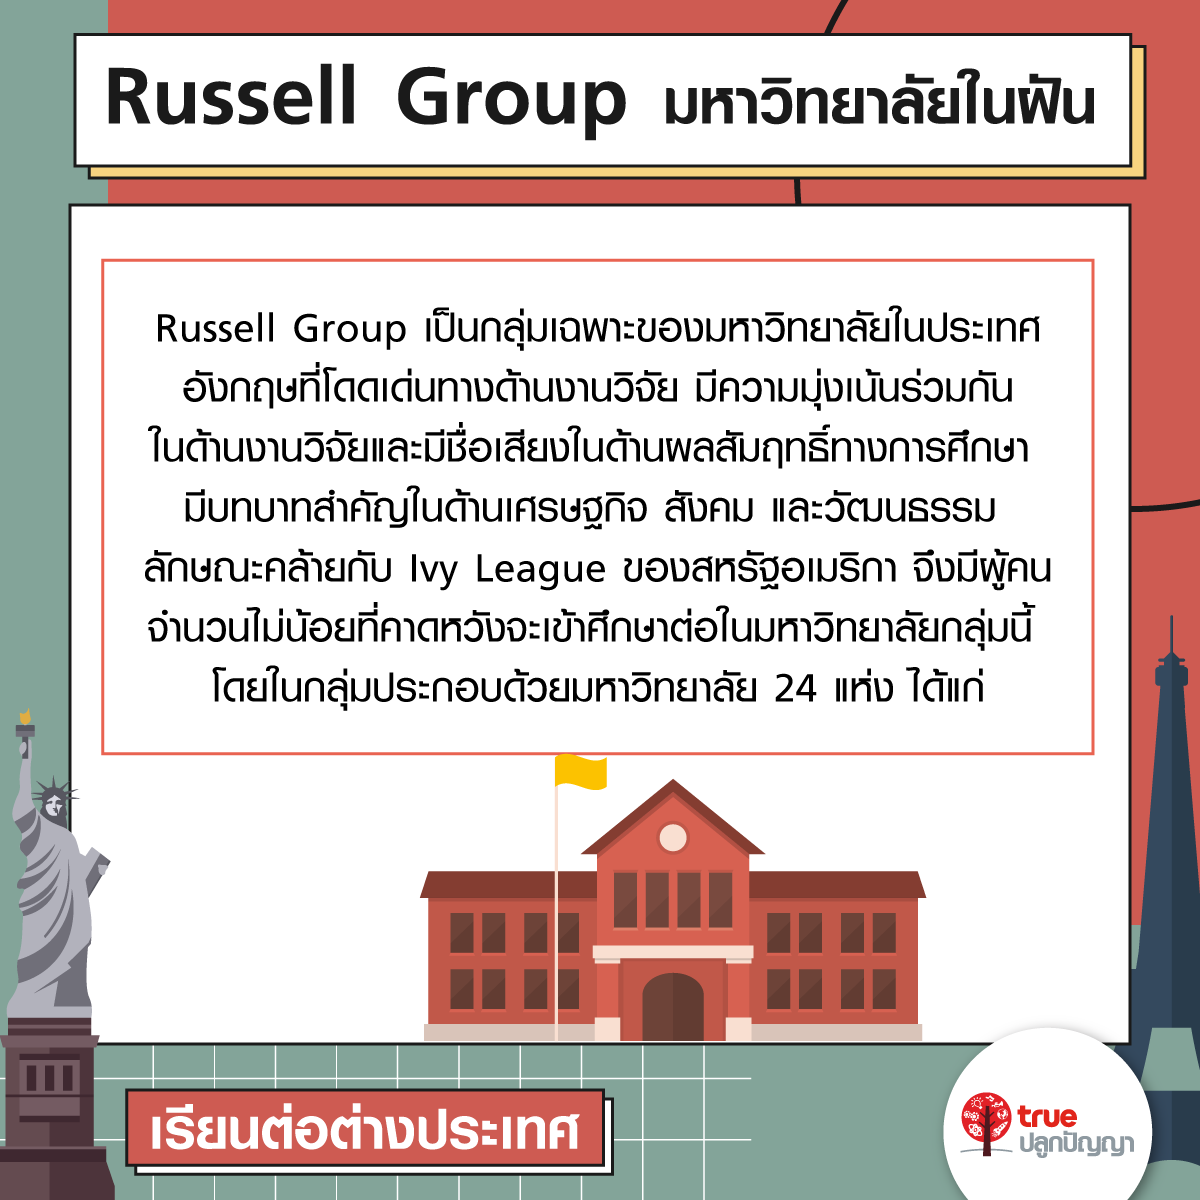 Russell Group มหาวิทยาลัยในฝัน